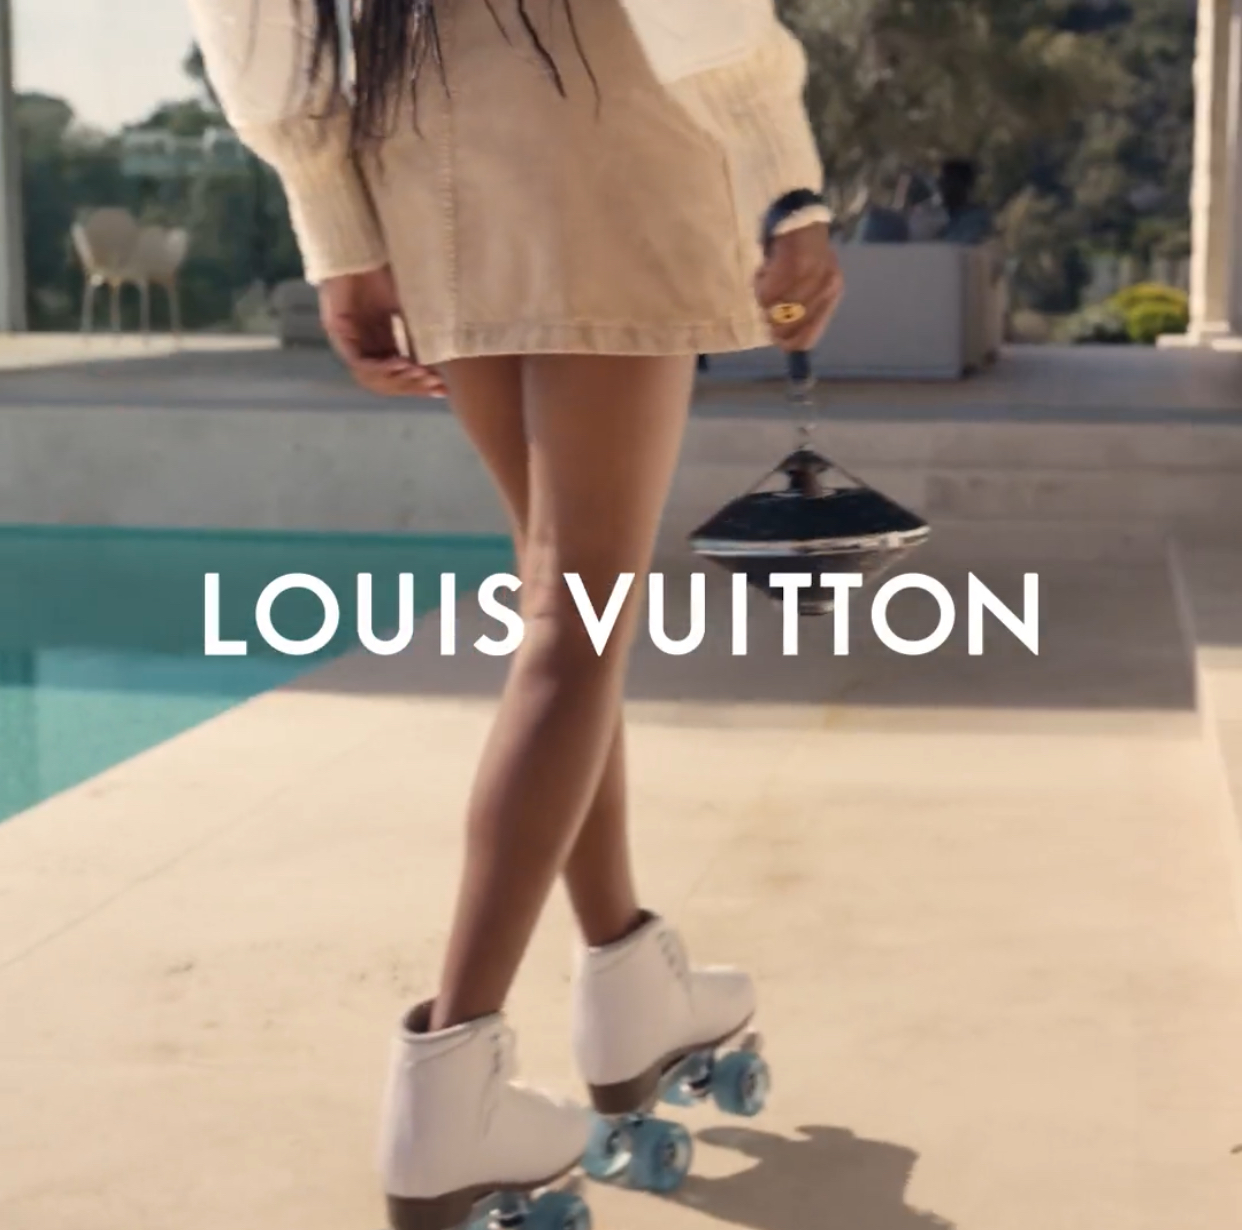 Louis Vuitton Horizon Light Up Speaker Launch Date